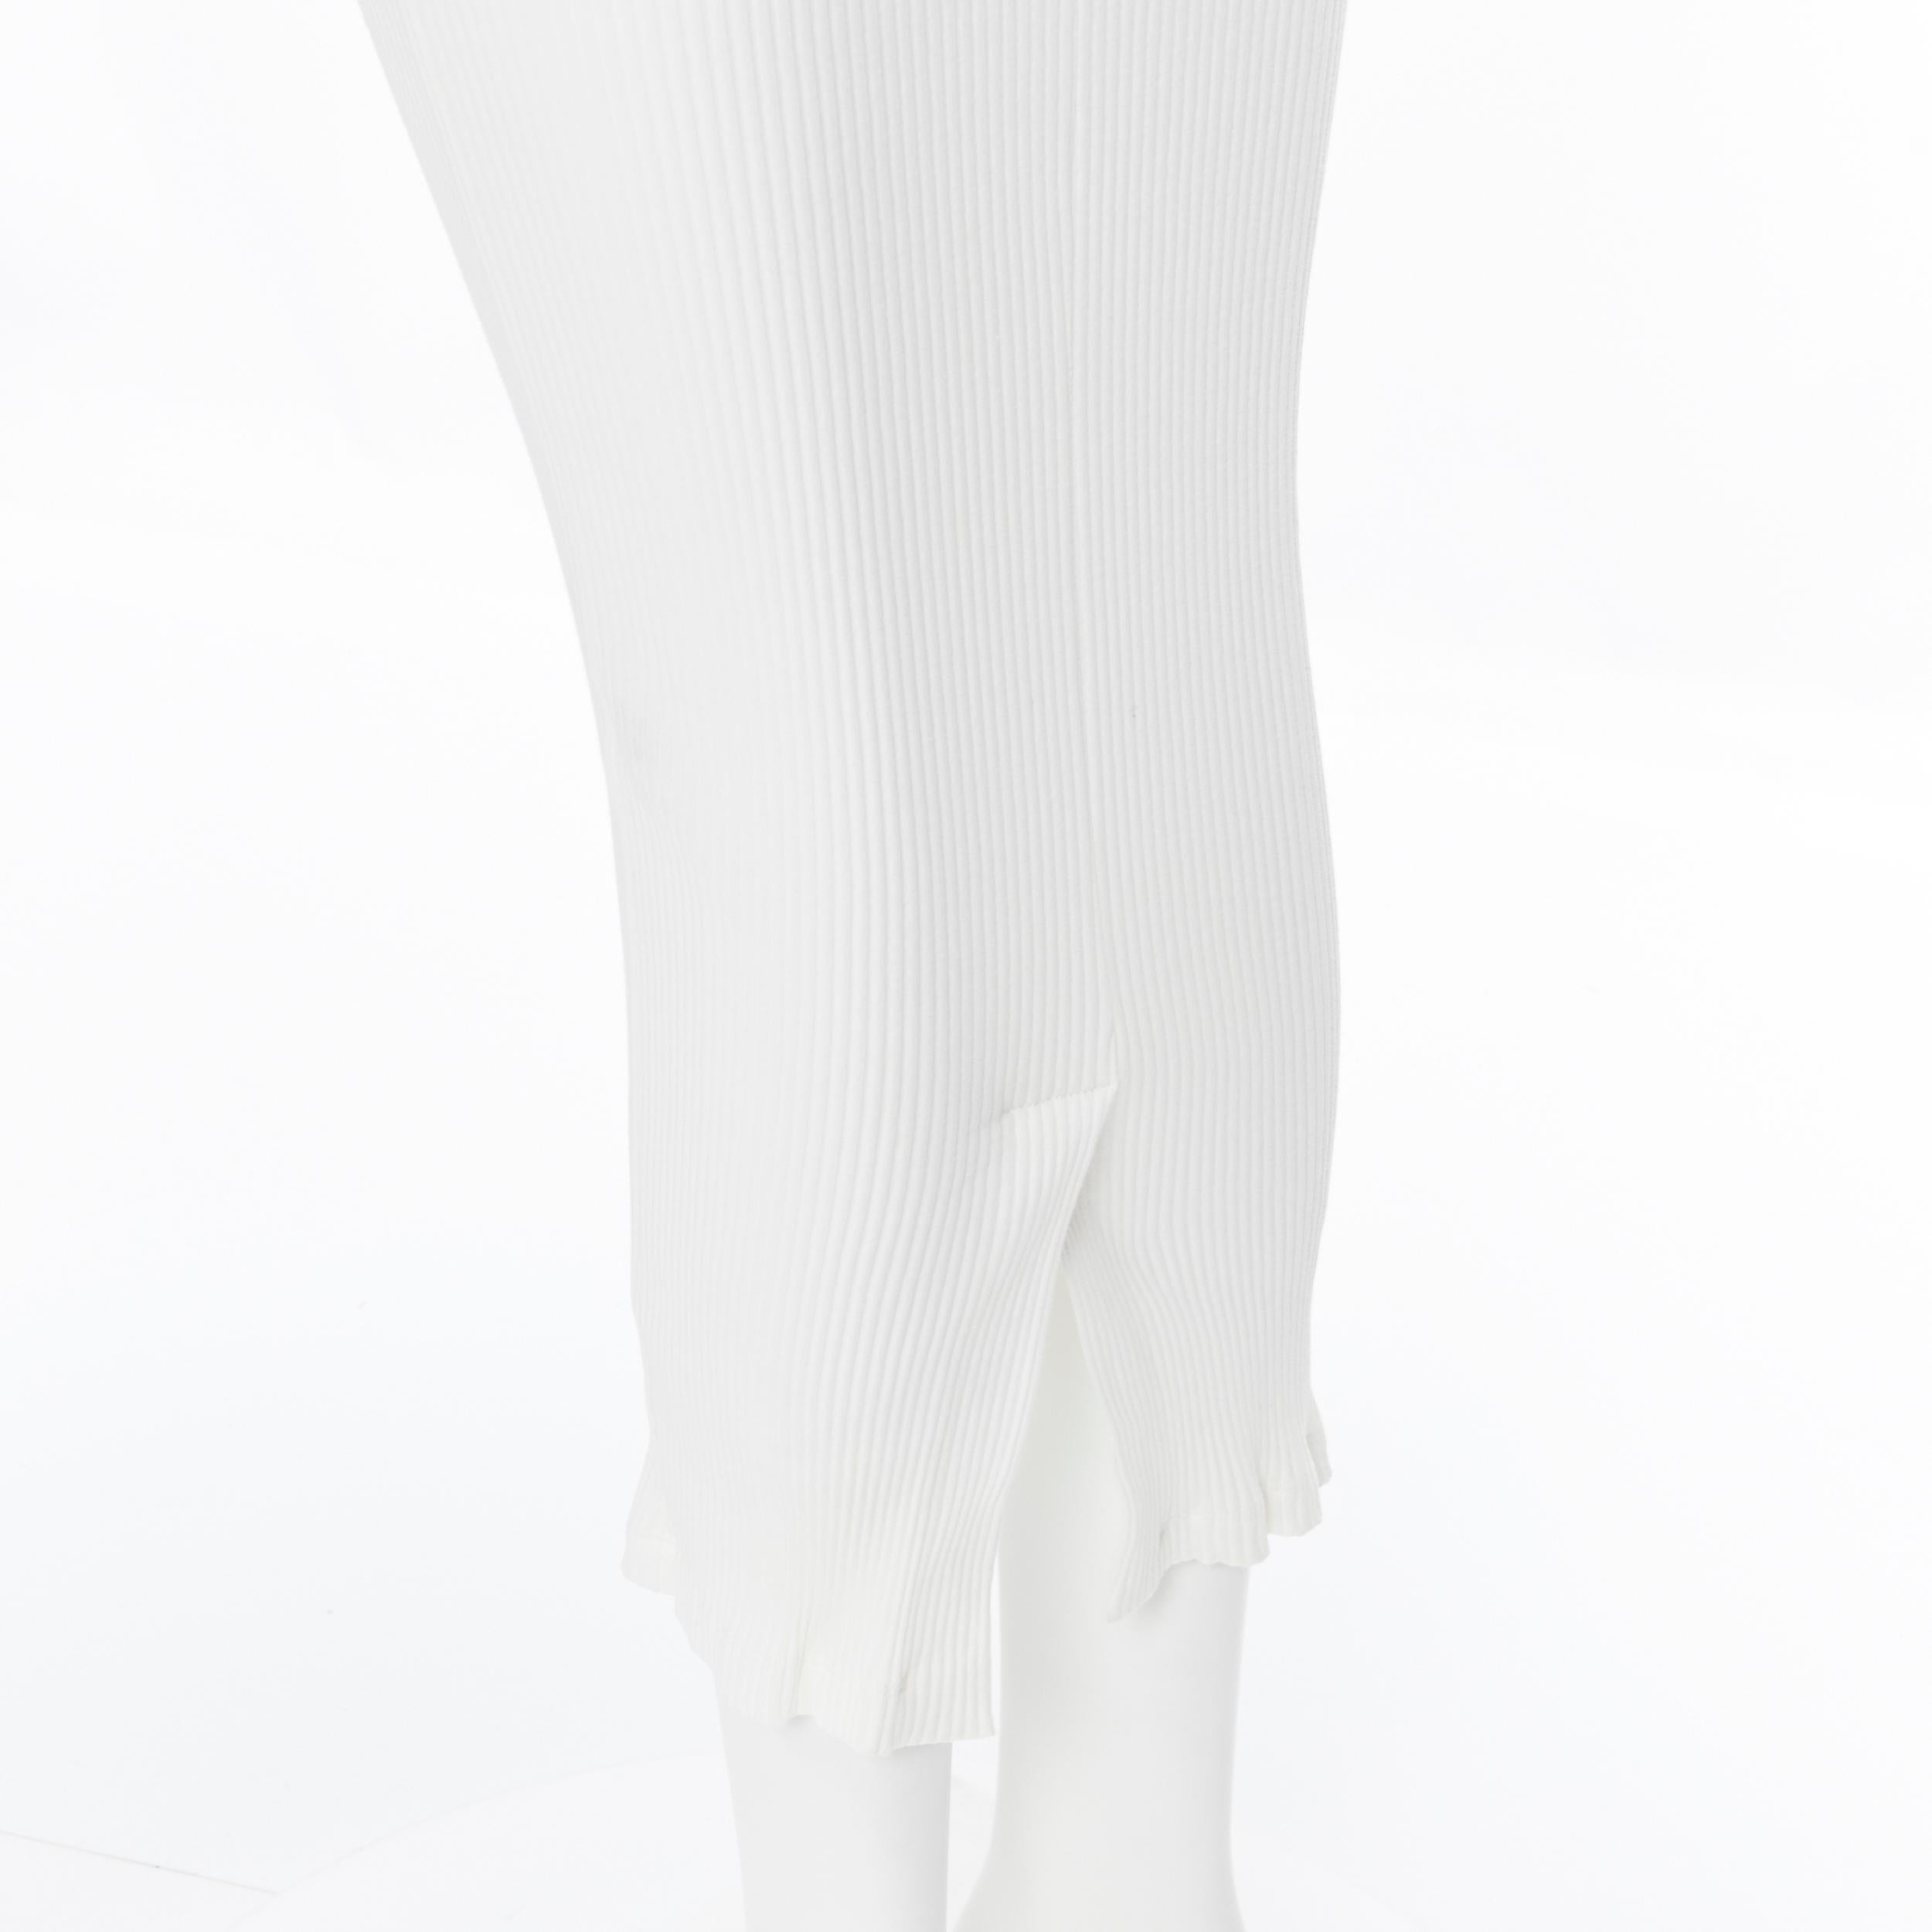 Women's MR LARKIN ivory white ribbed stretch fit minimalist casual day dress XS